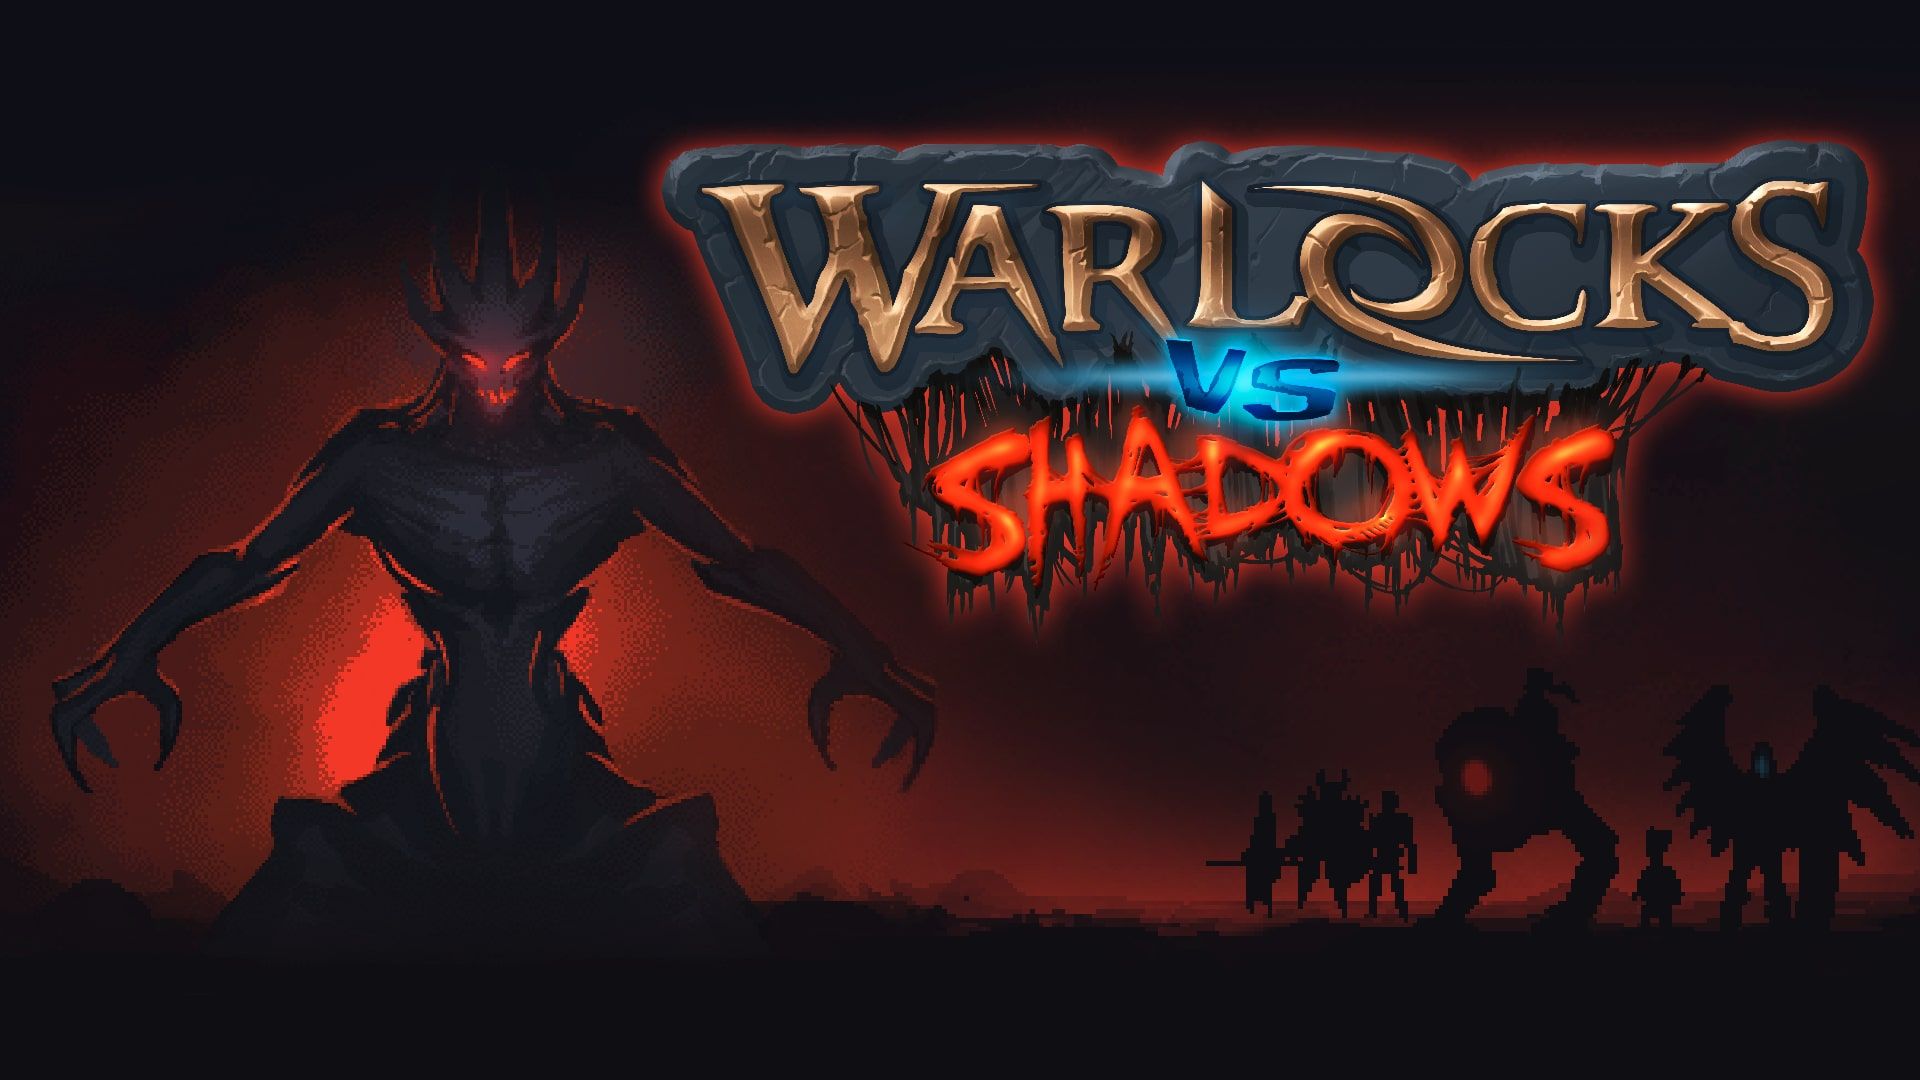 Warlocks vs Shadows cover image